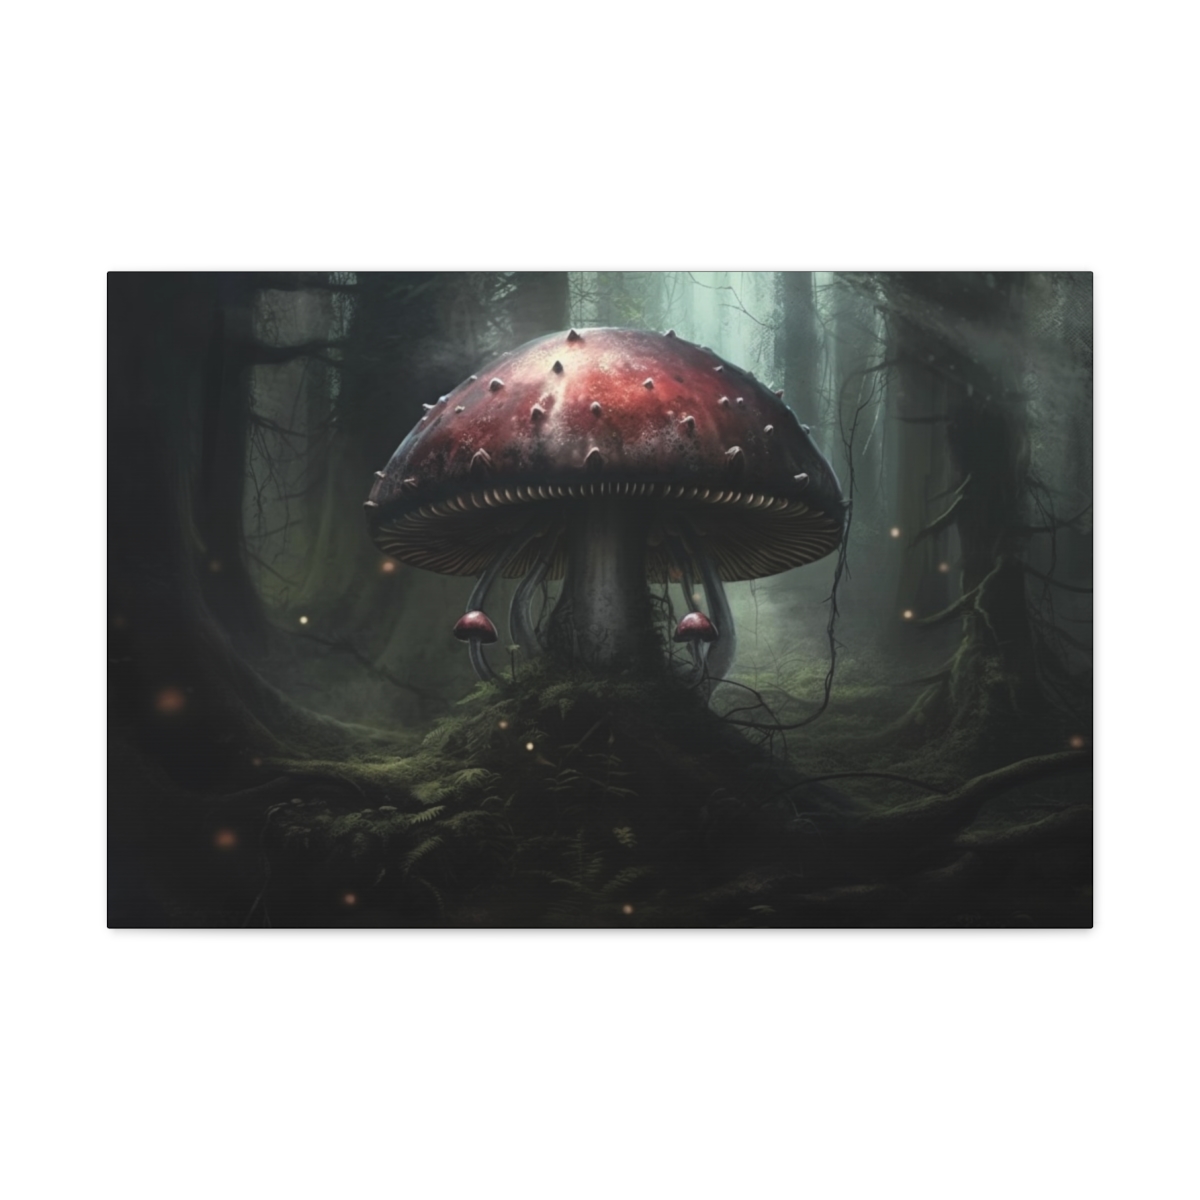 Cosmic Trippy Art: On This Road The Mushroom Reigns